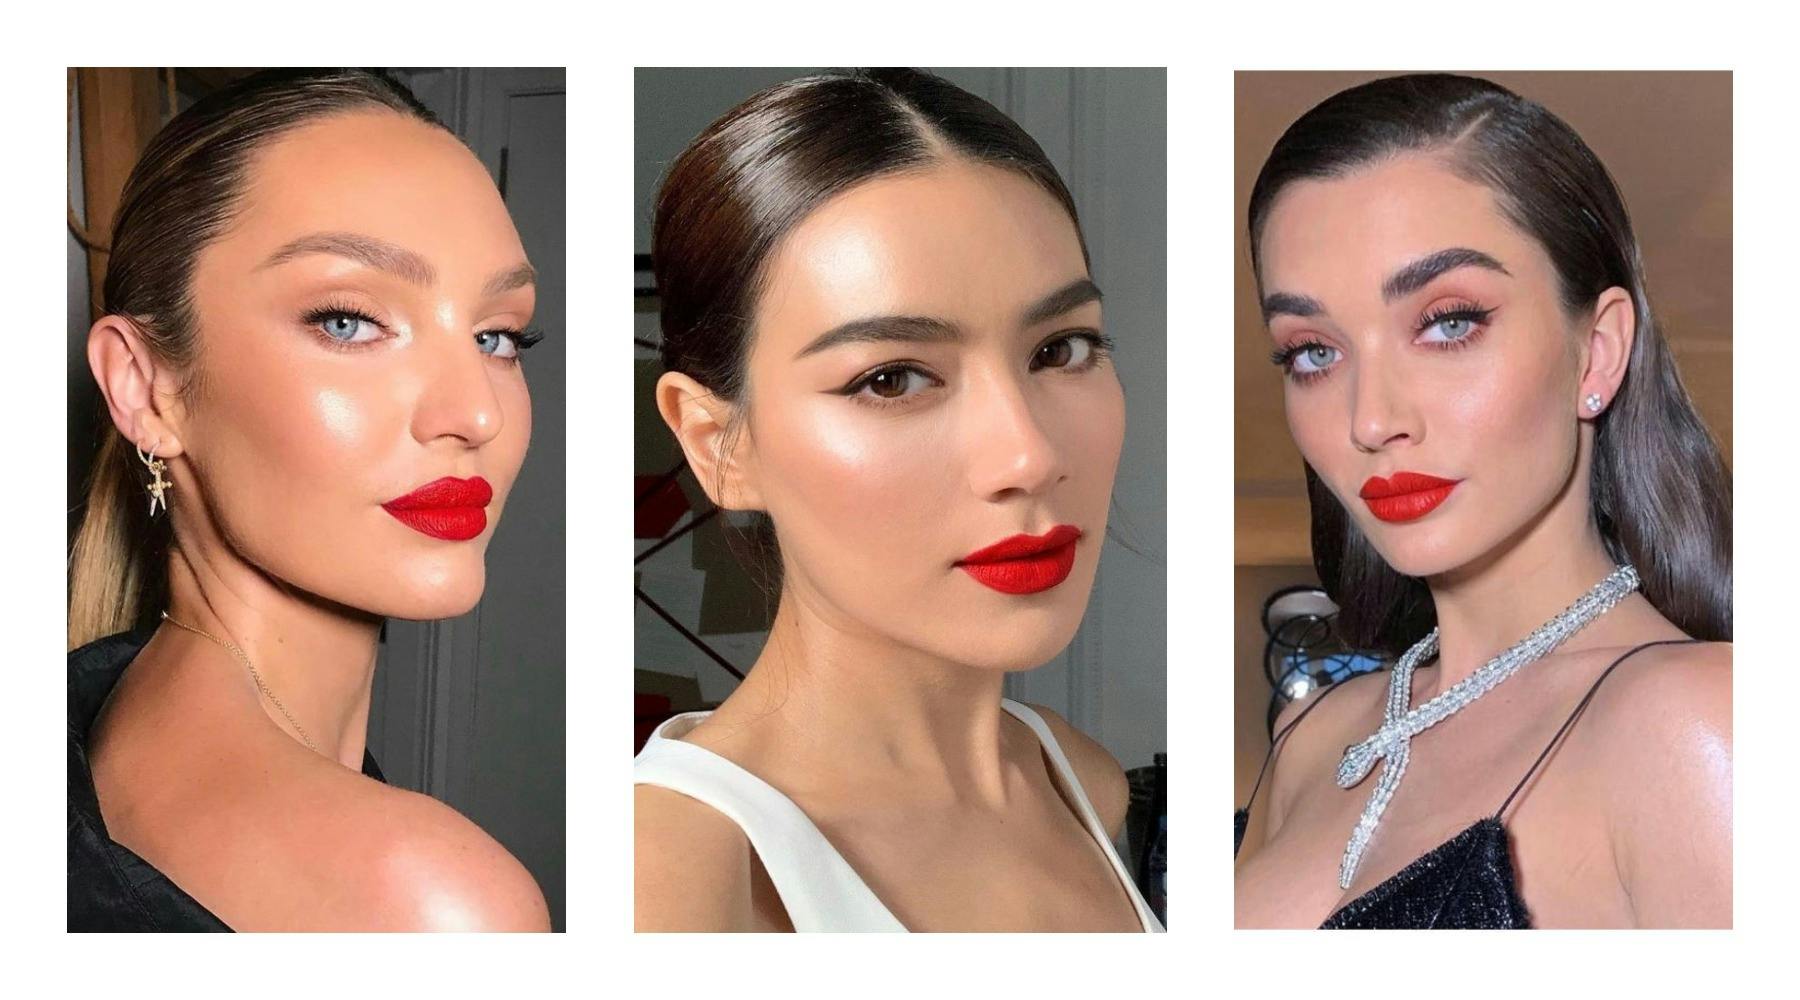 klippe Overstige roman 7 Ways to Wear a Classic Red Lip - Red Lipstick Makeup Beauty Tutorial